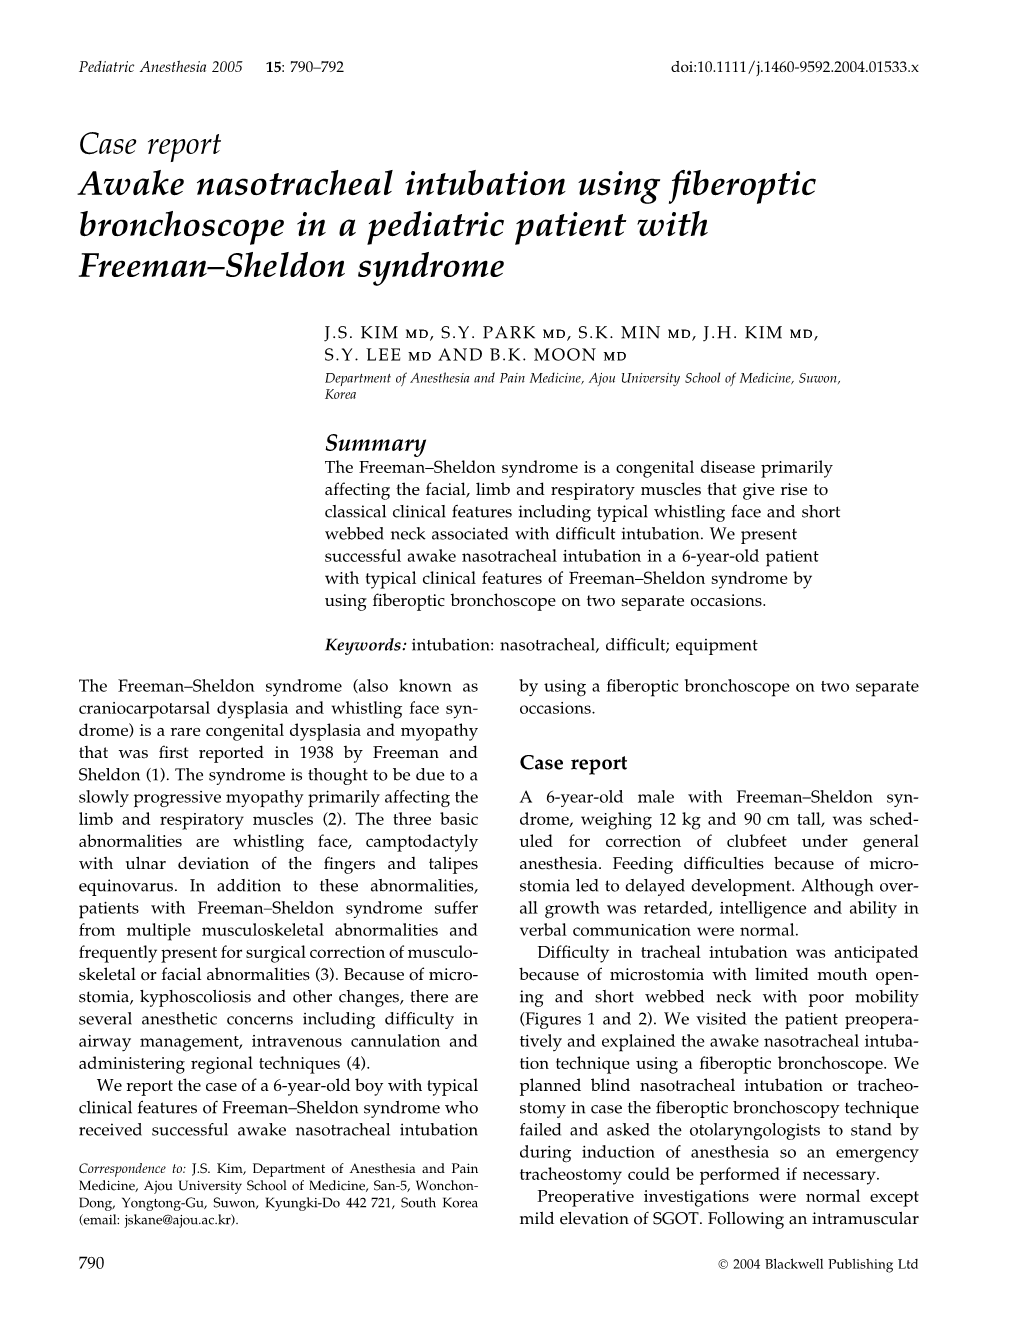 Awake Nasotracheal Intubation Using Fiberoptic Bronchoscope in A